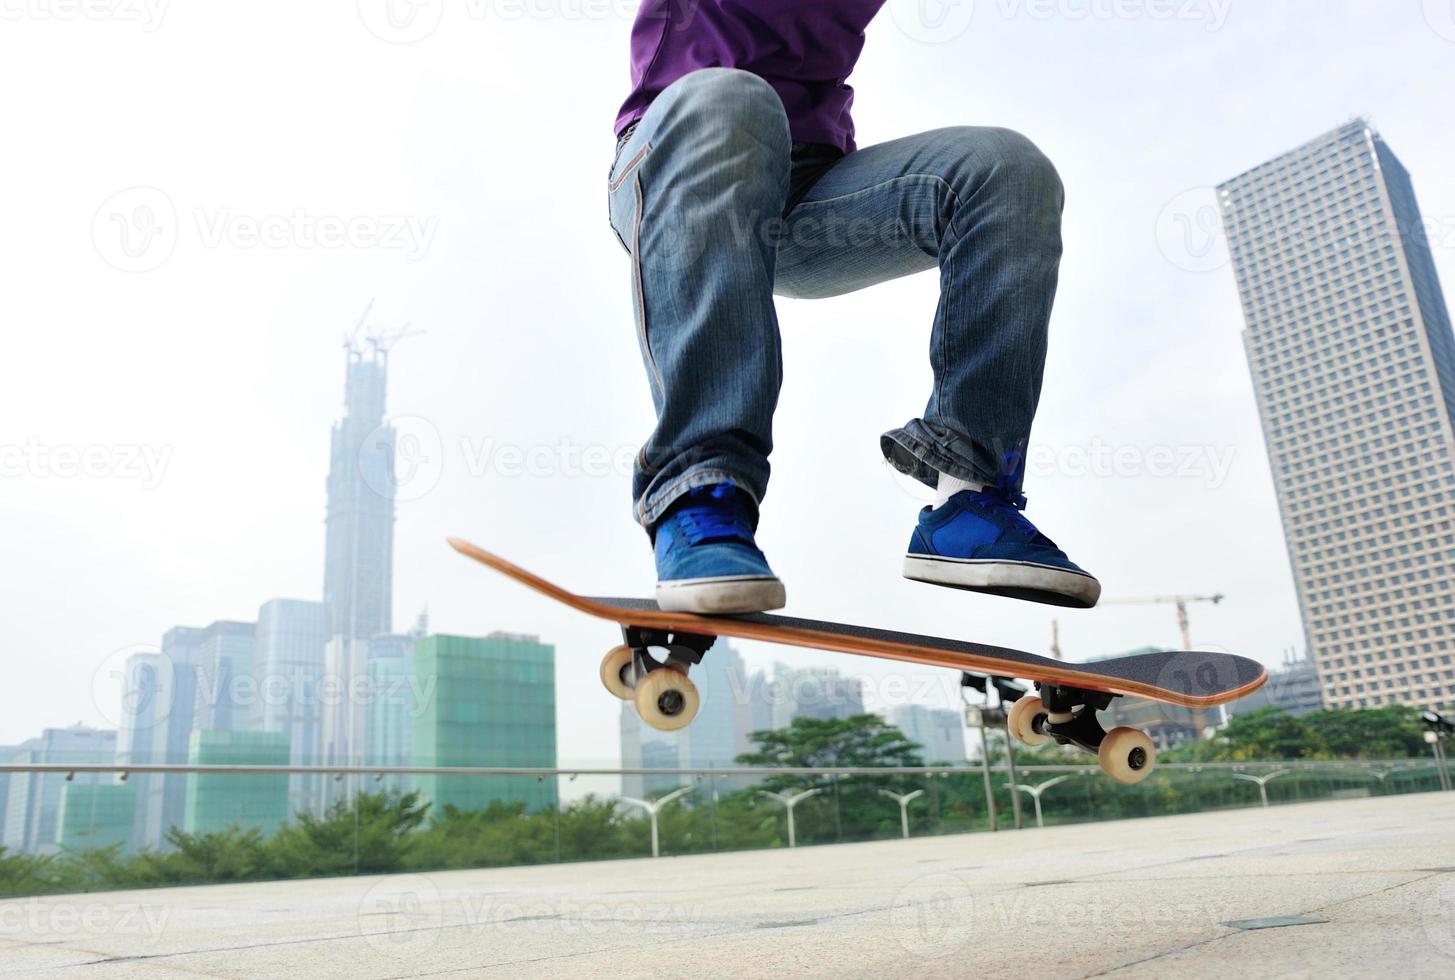 skateboarding woman jumping photo